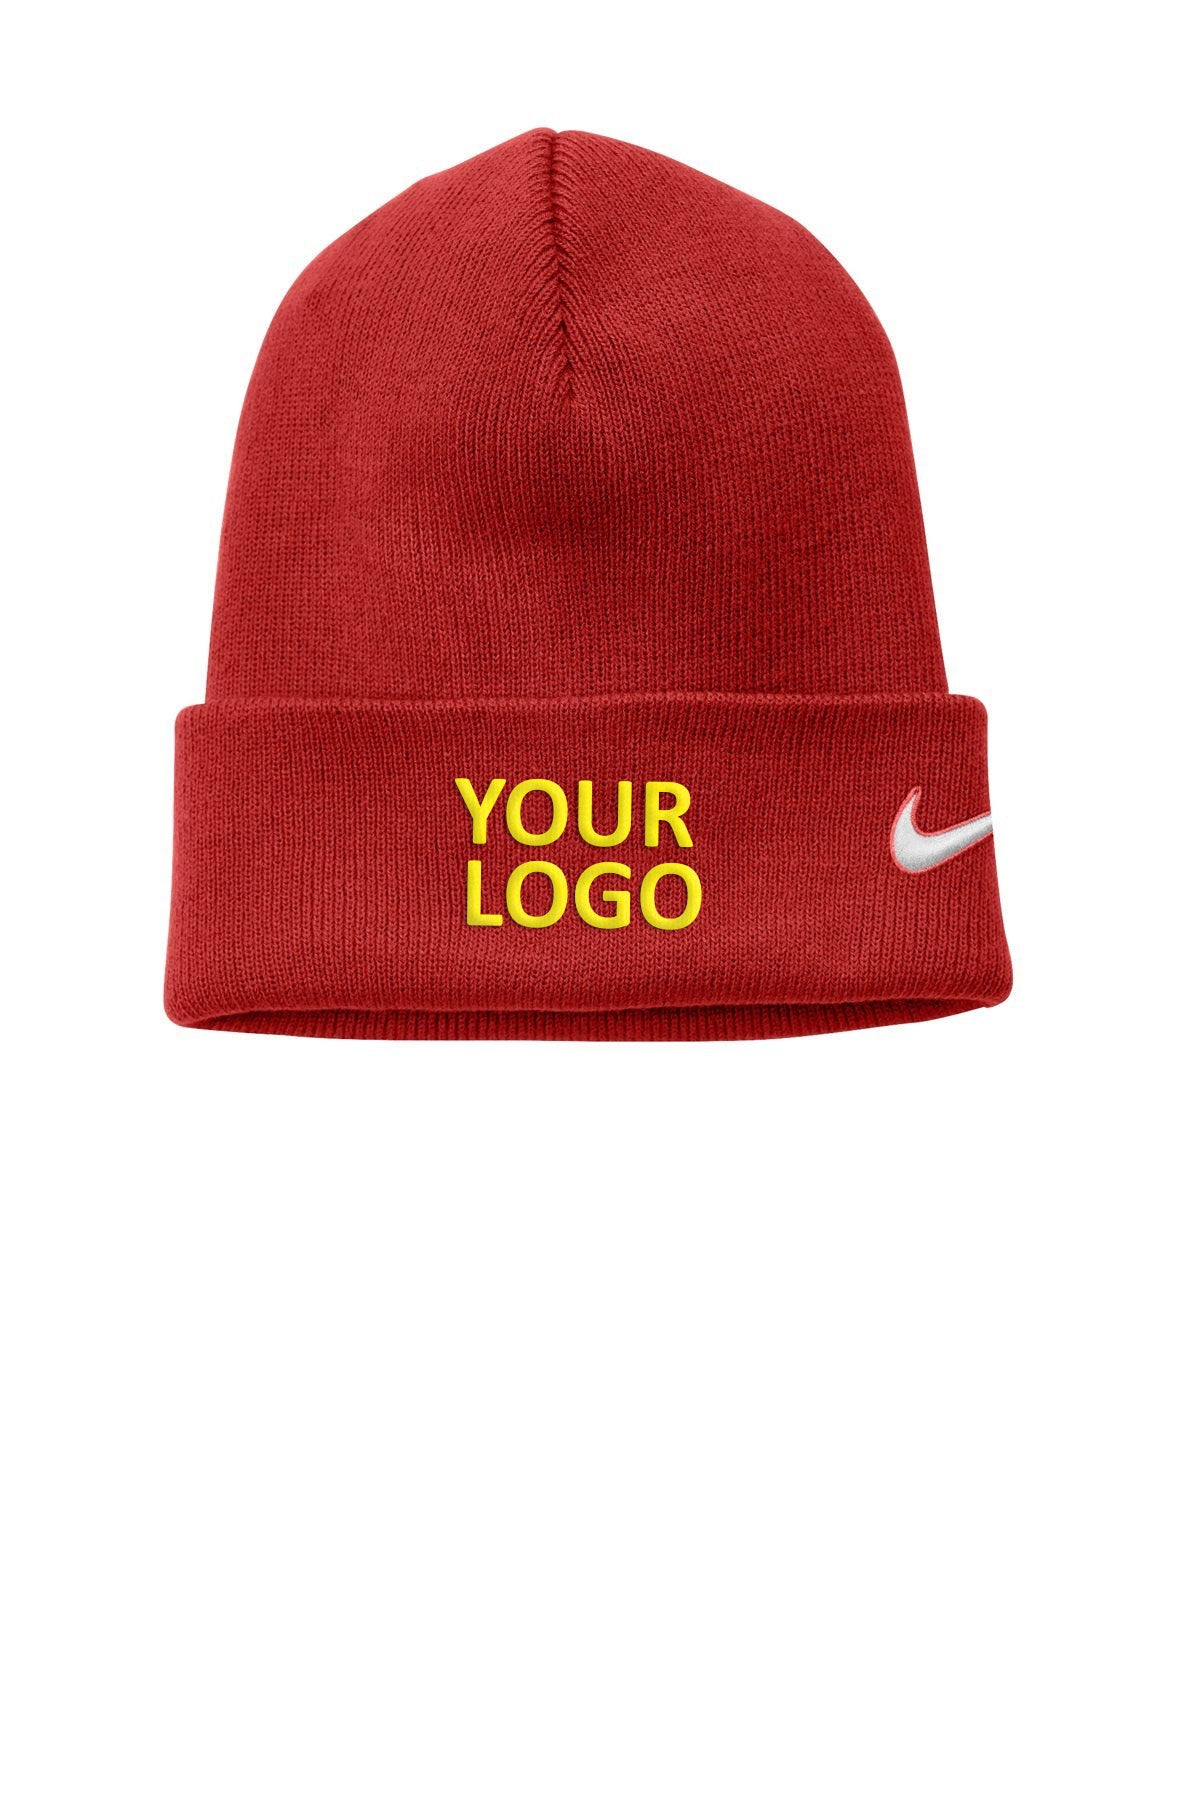 Nike Team Branded Beanies, University Red